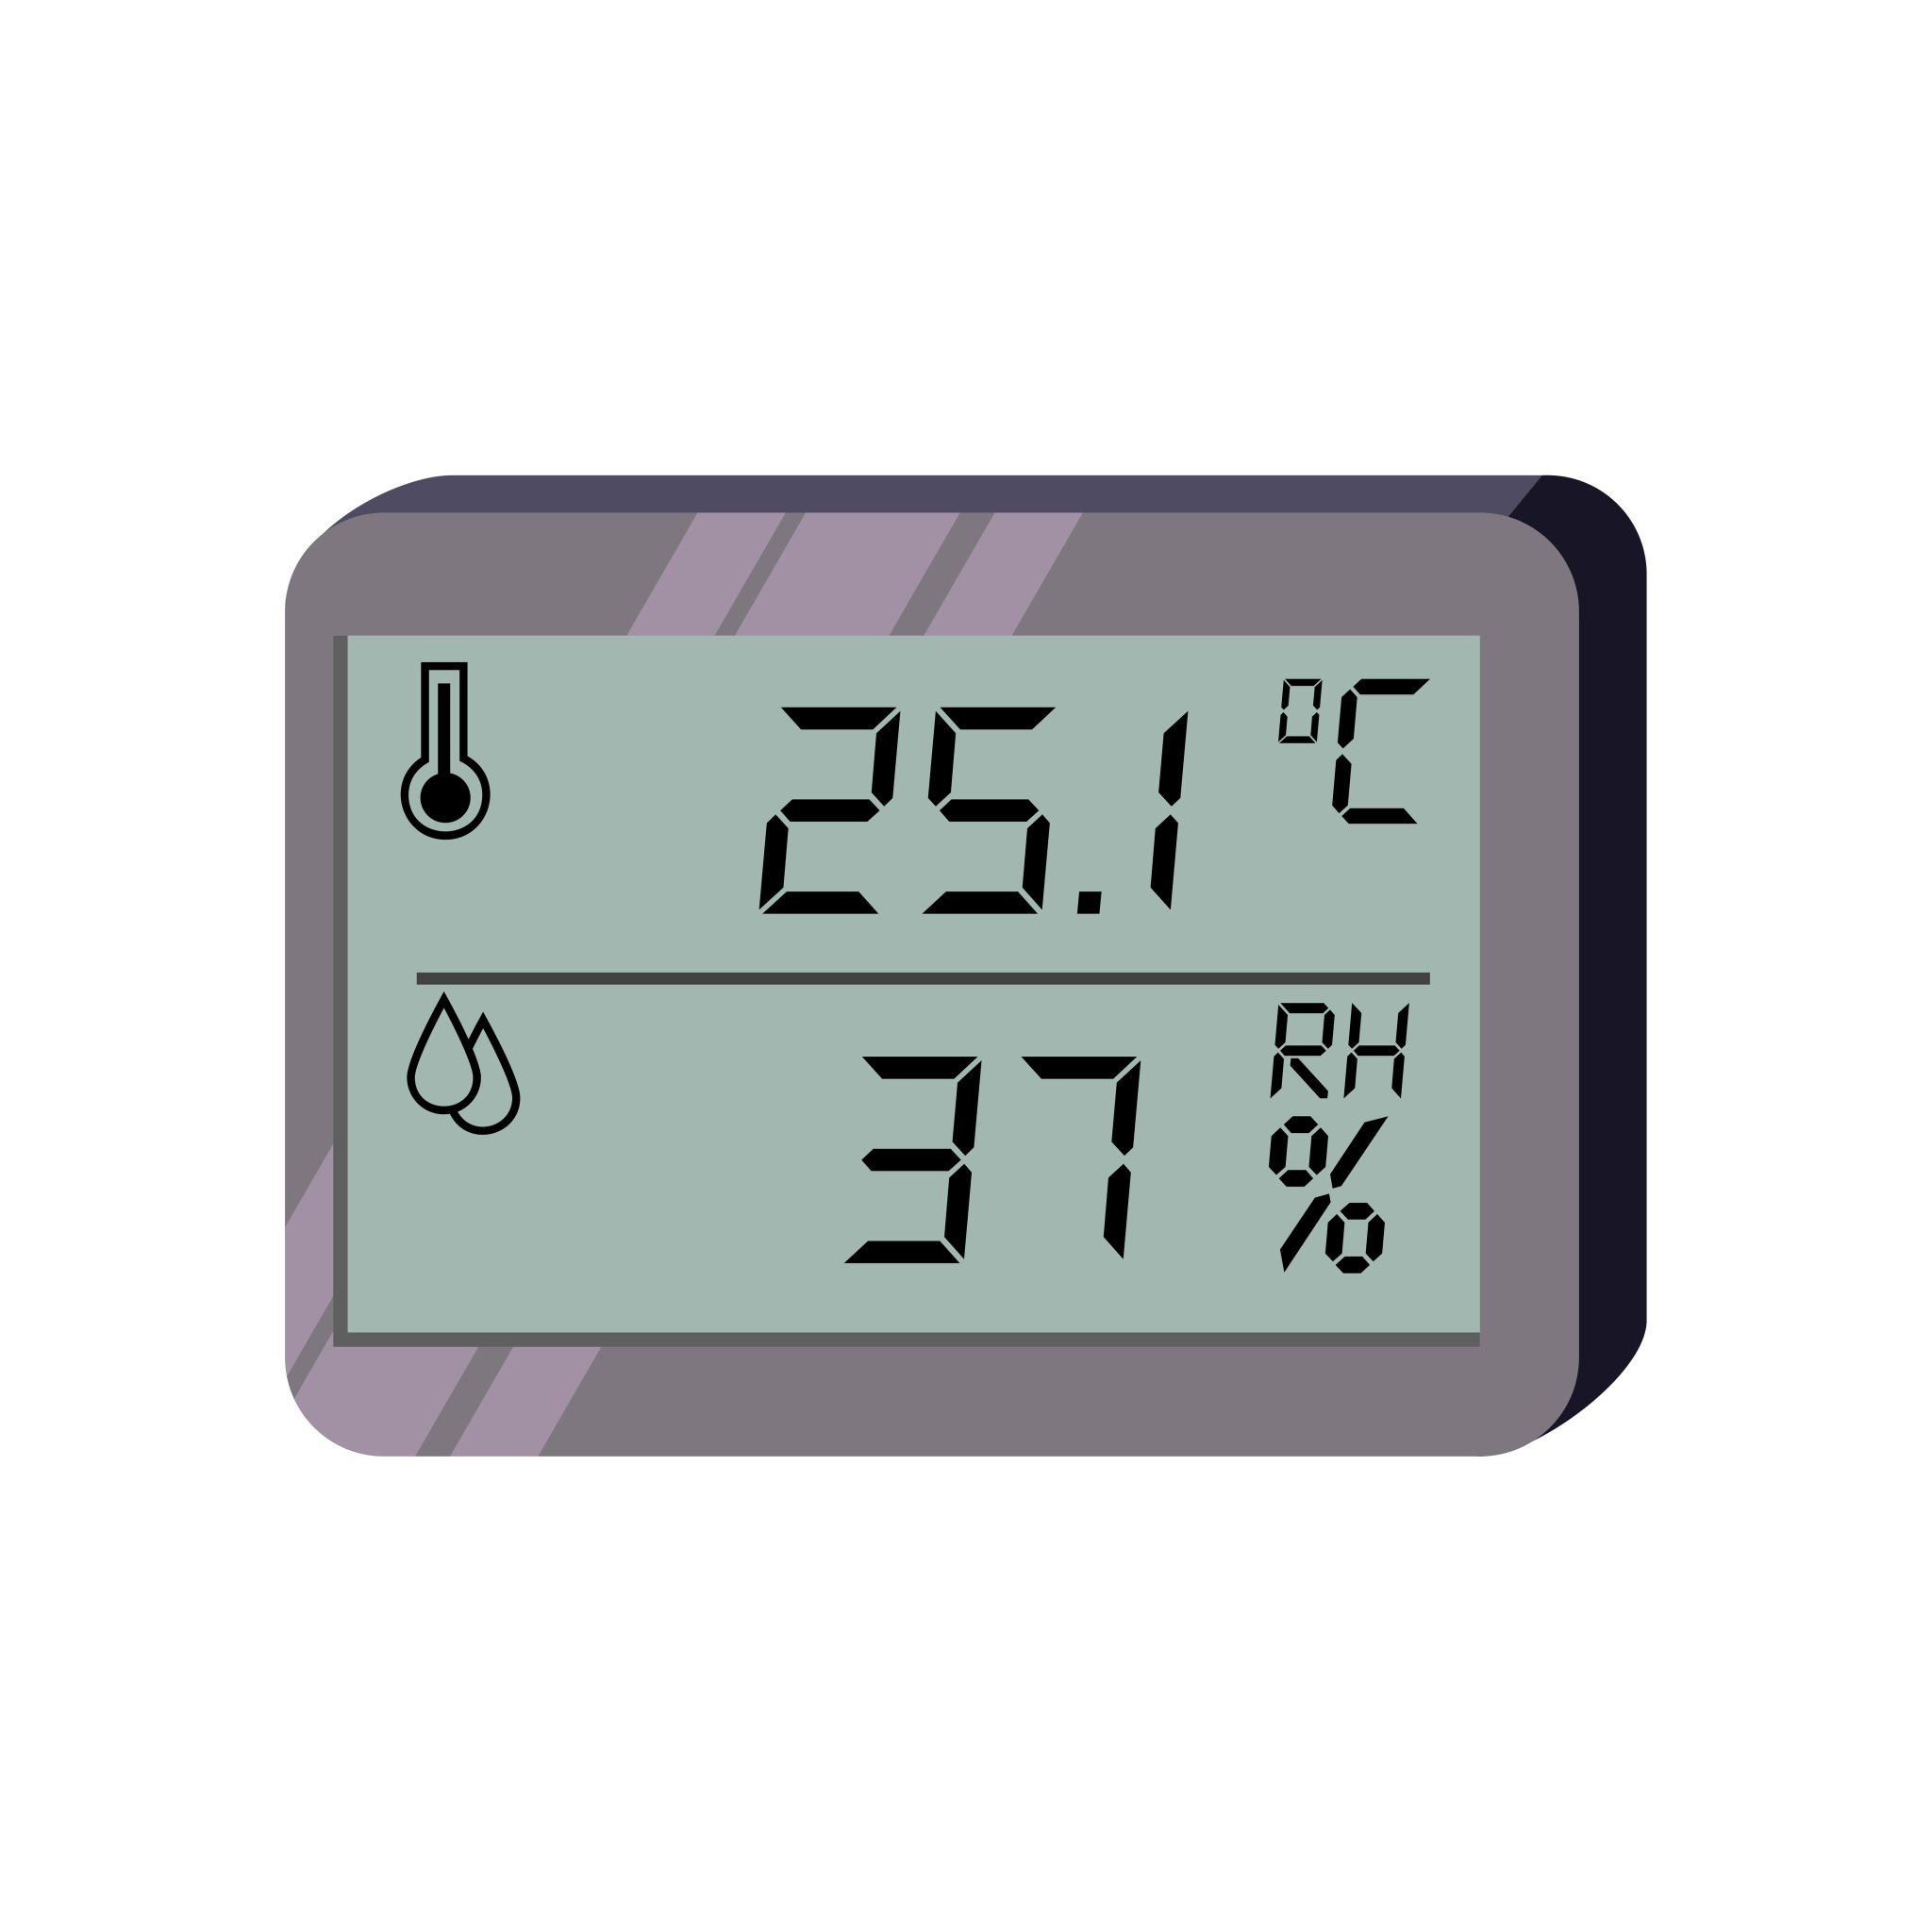 Hydroponics Indoor Grow Tent Digital Thermometer Hygrometer